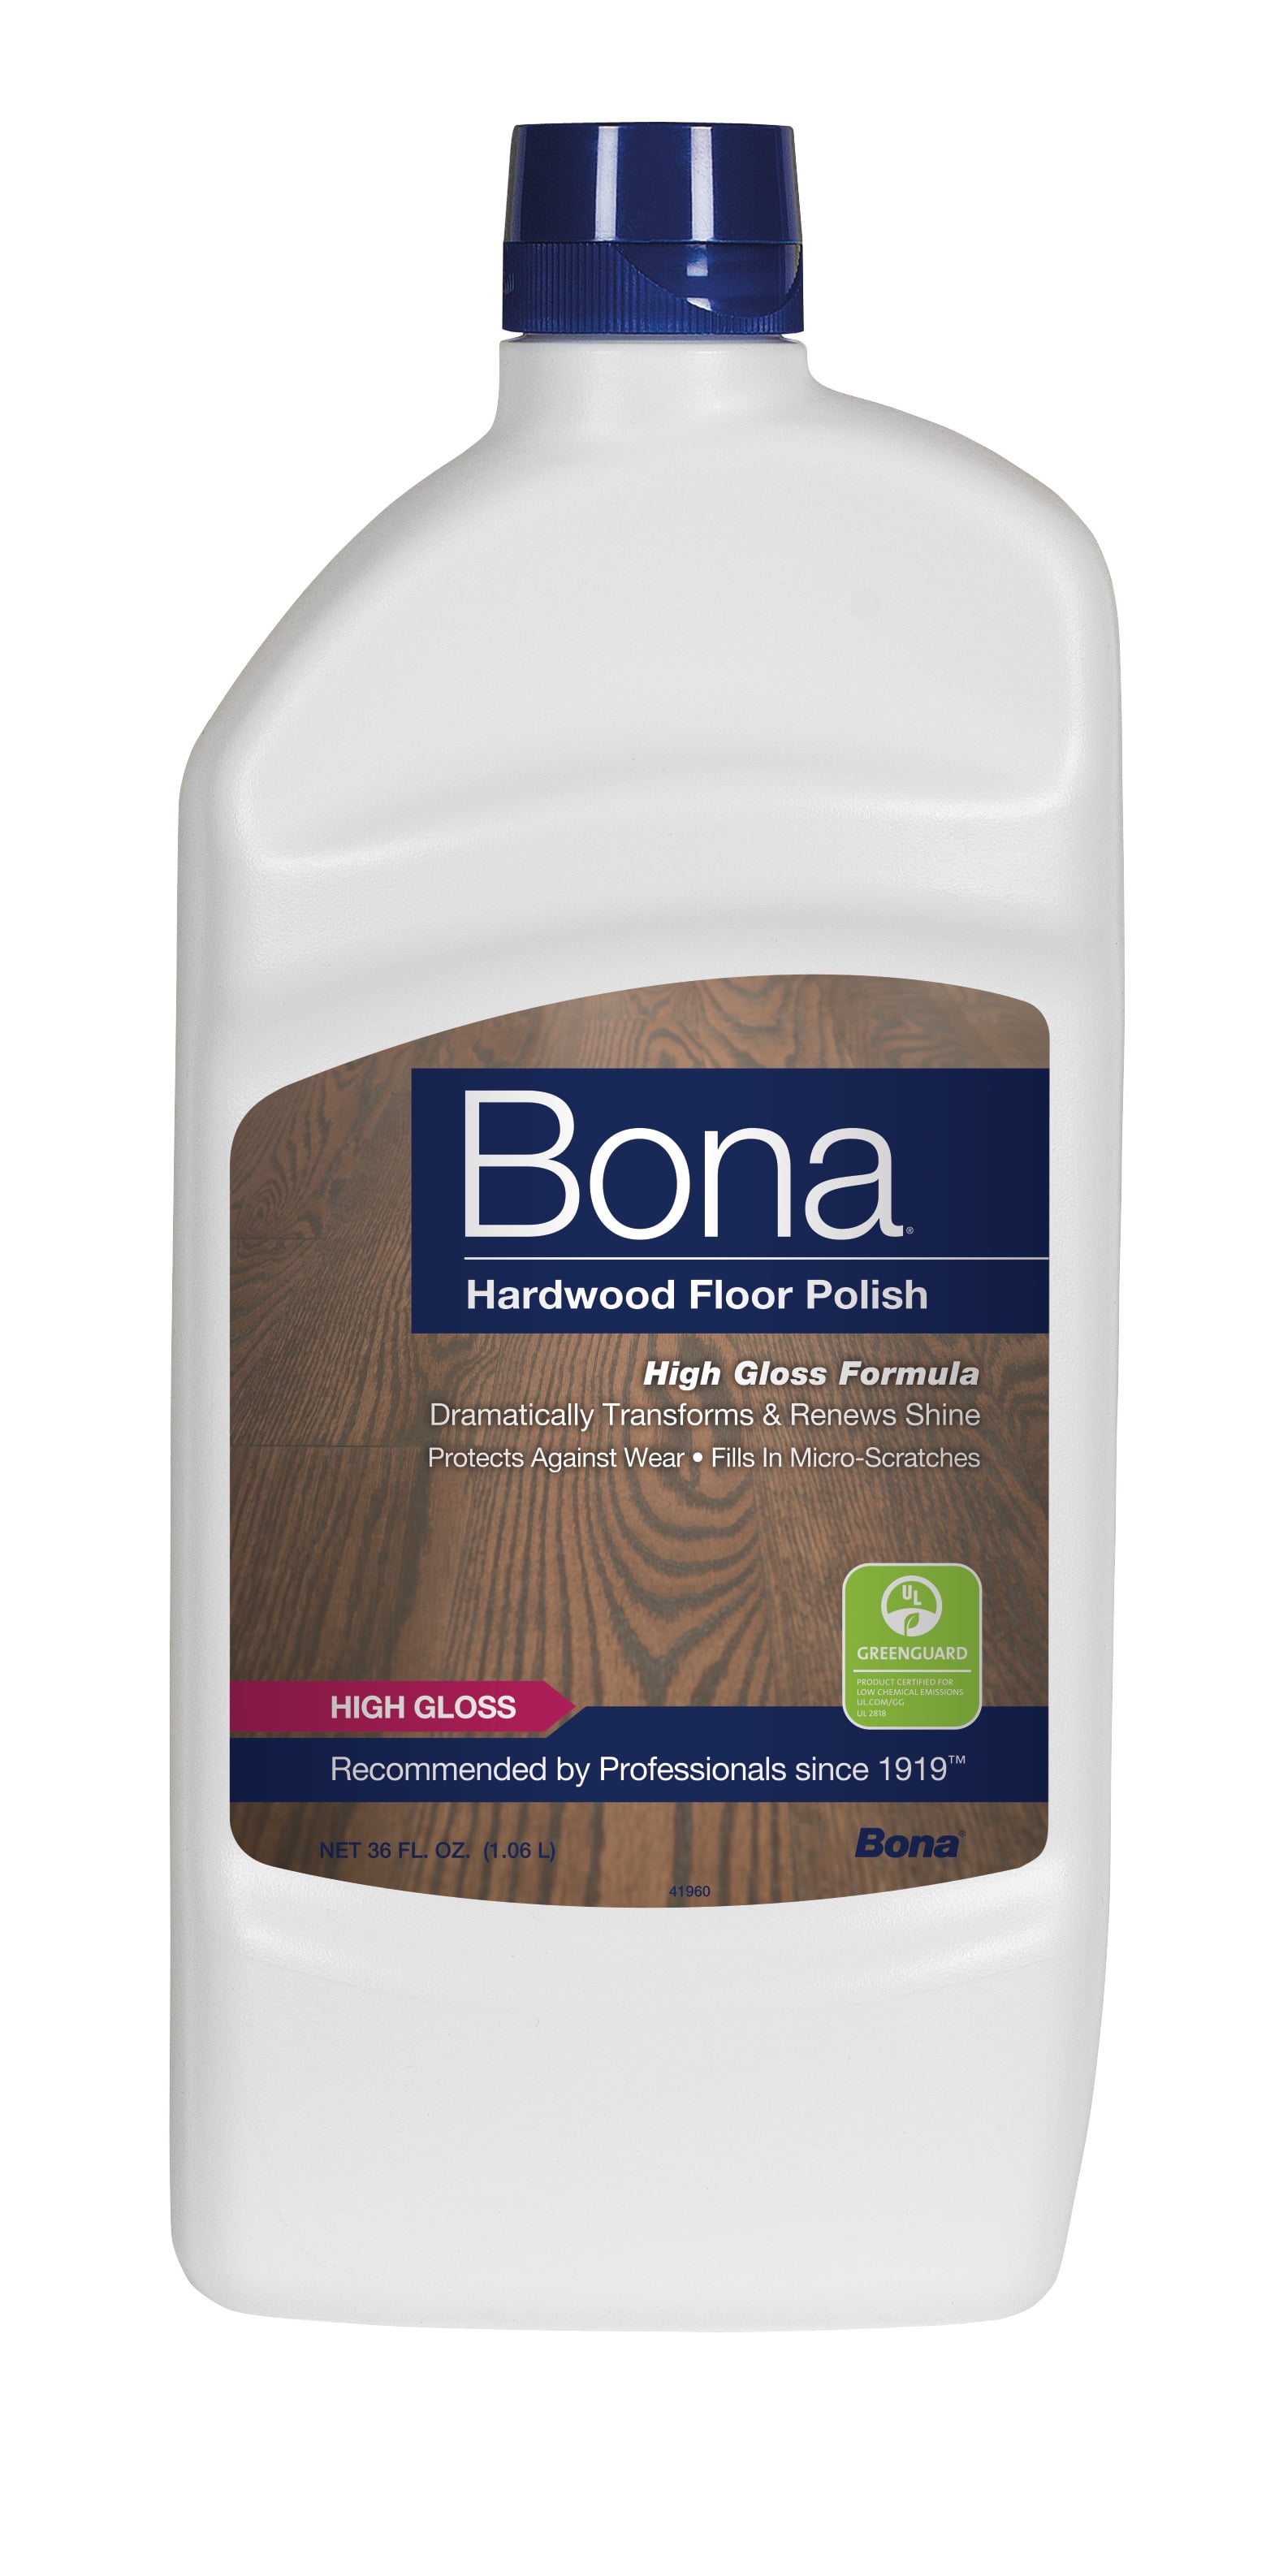 Bona Hardwood Floor Polish Low Gloss, Bona Hardwood Floor Refresher Reviews